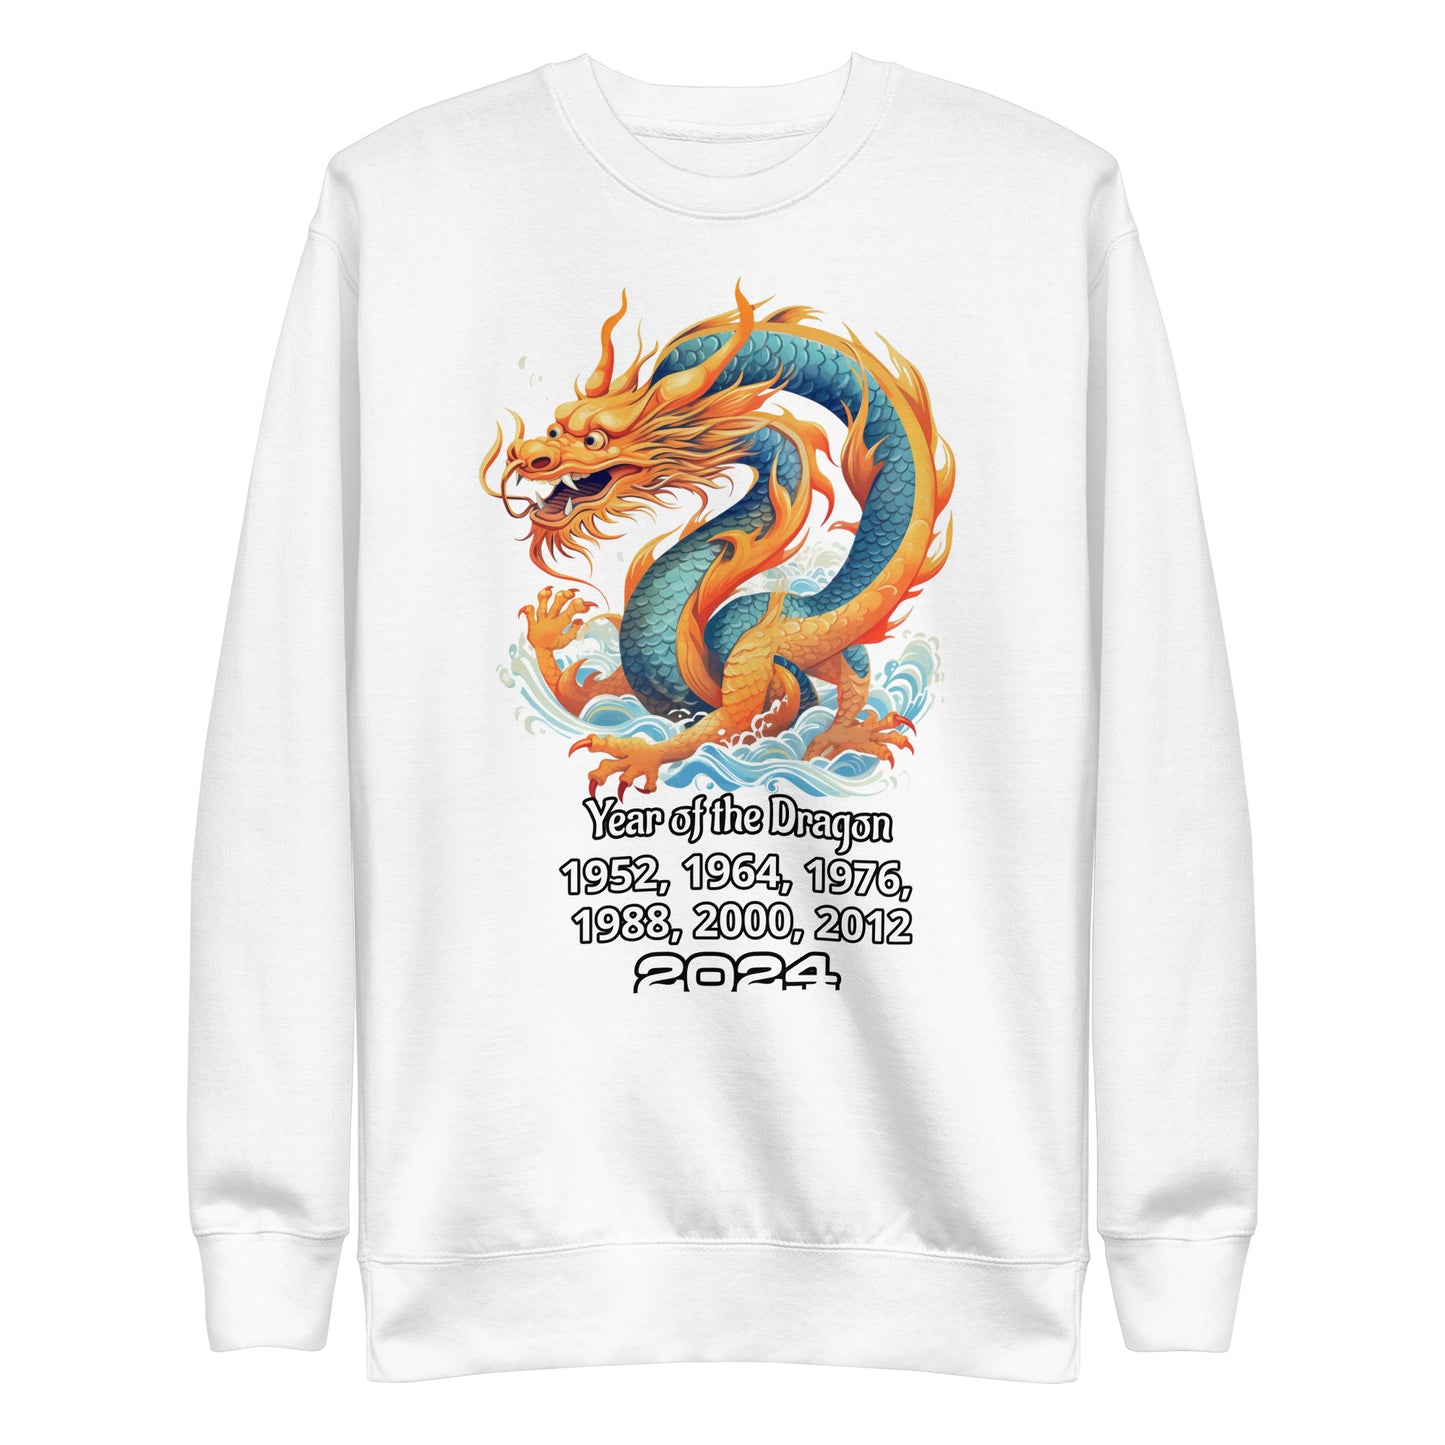 Year of the Dragon Unisex Premium Sweatshirt